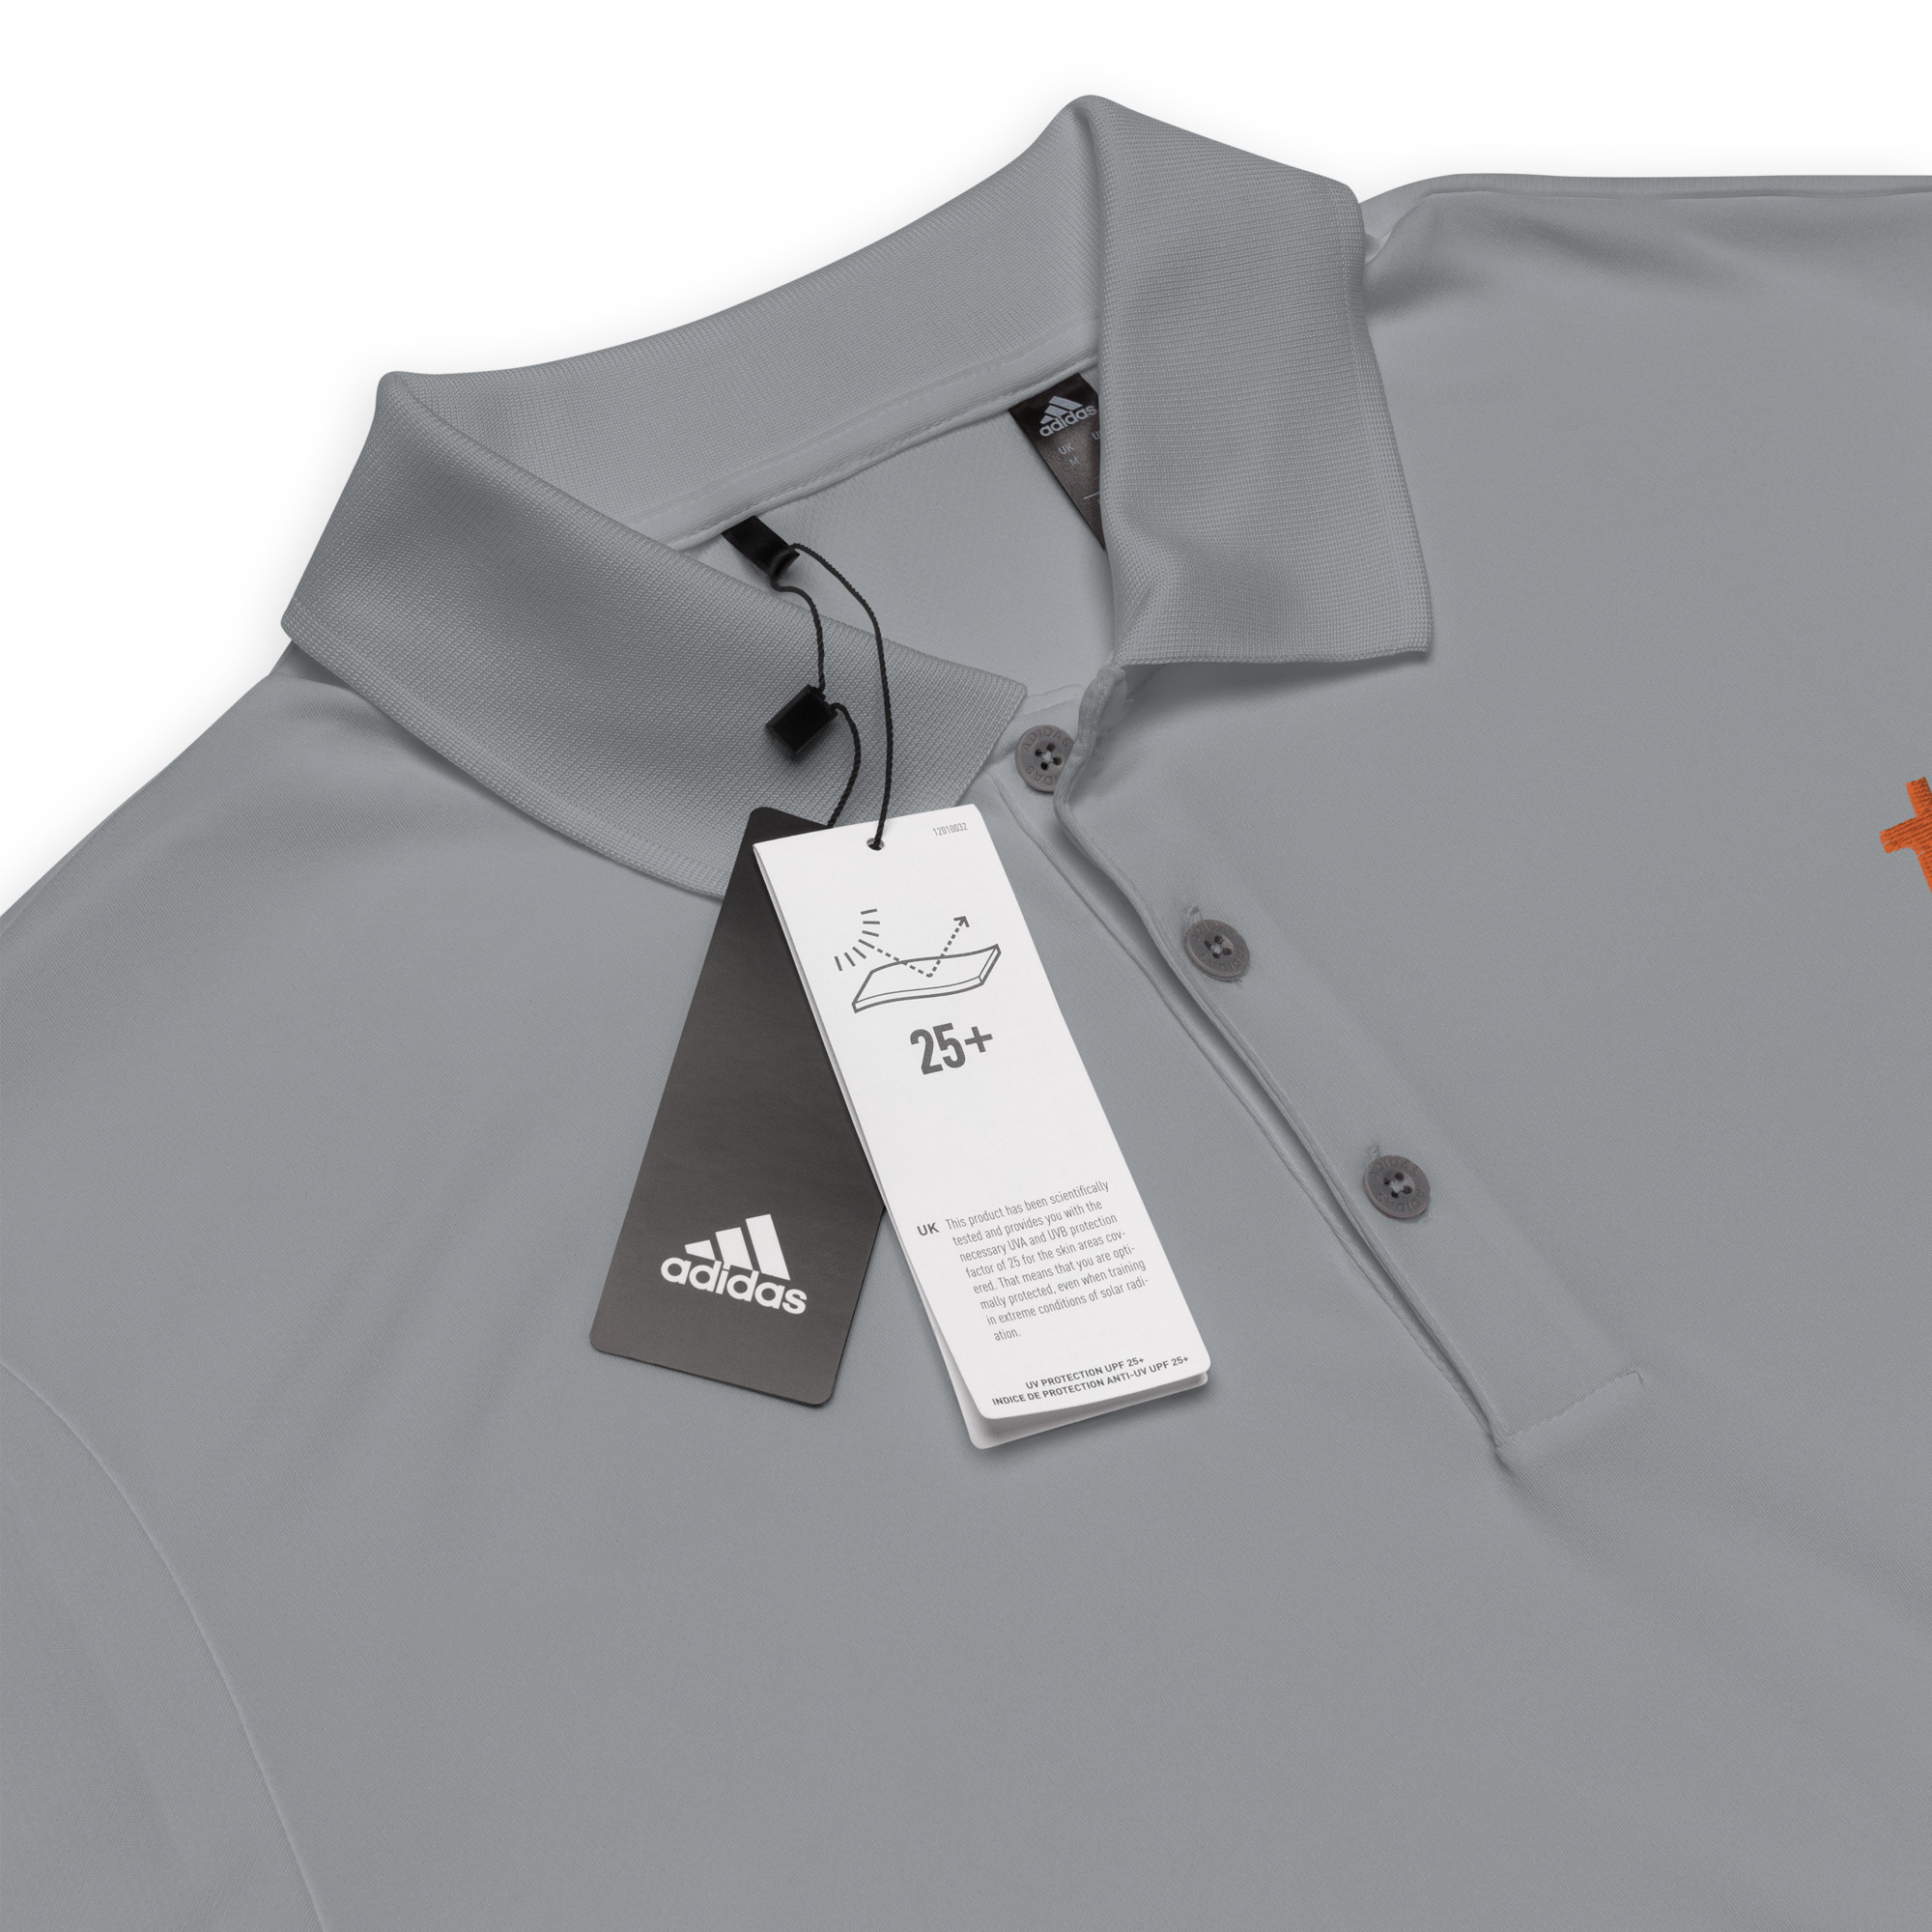 Bitcoin shirt - bitcoin adidas polo shirt lying flat close up of tags - Gray bitcoin polo shirt